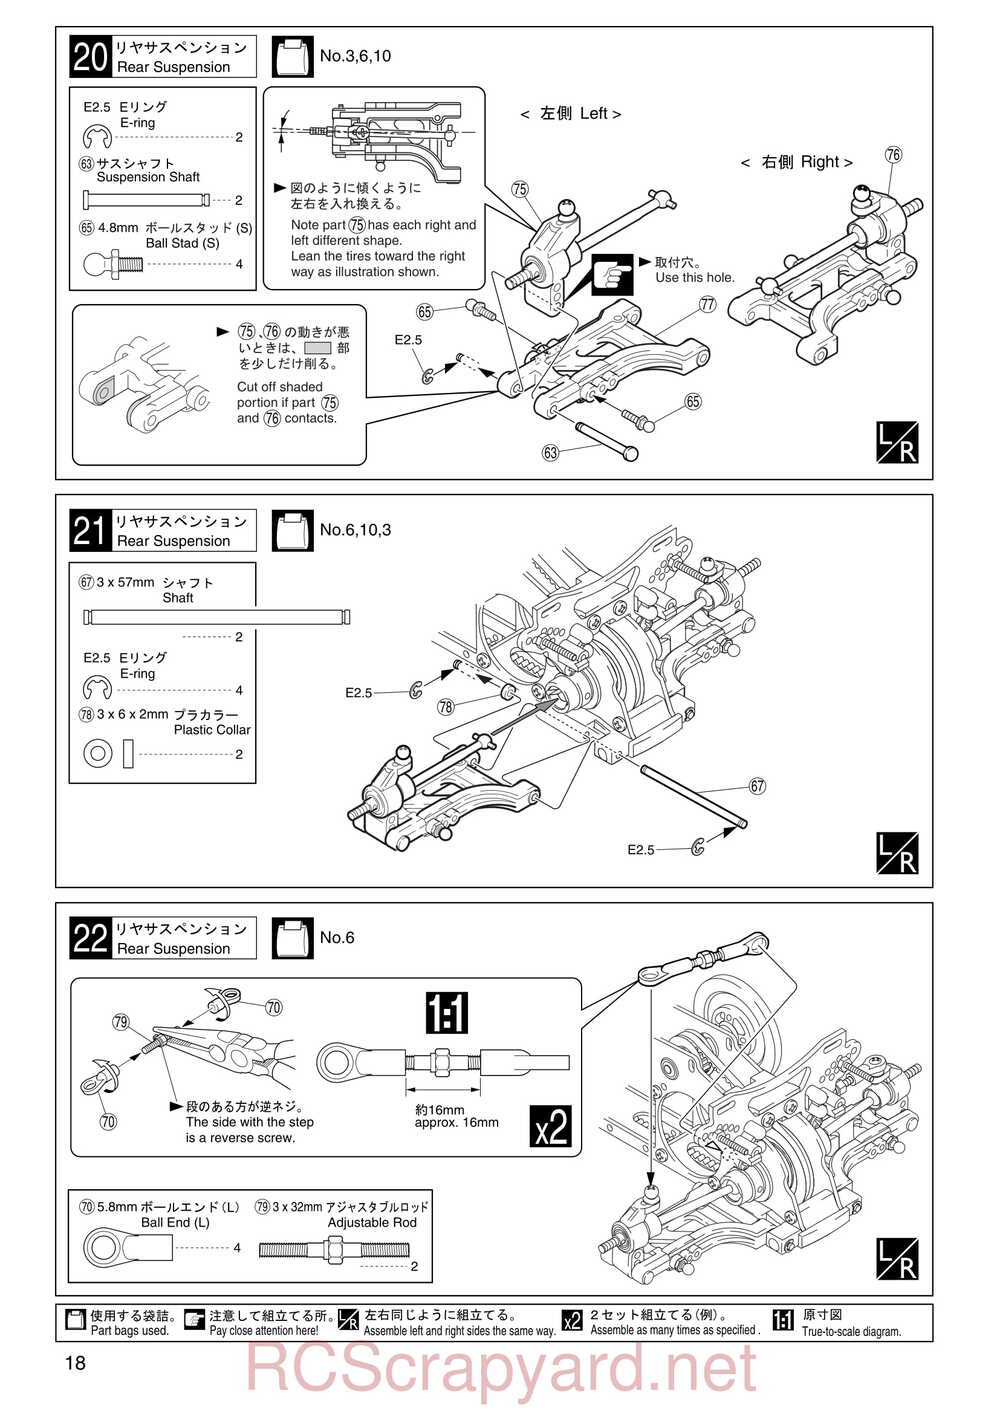 Kyosho - 30101 - KX-One - Manual - Page 18